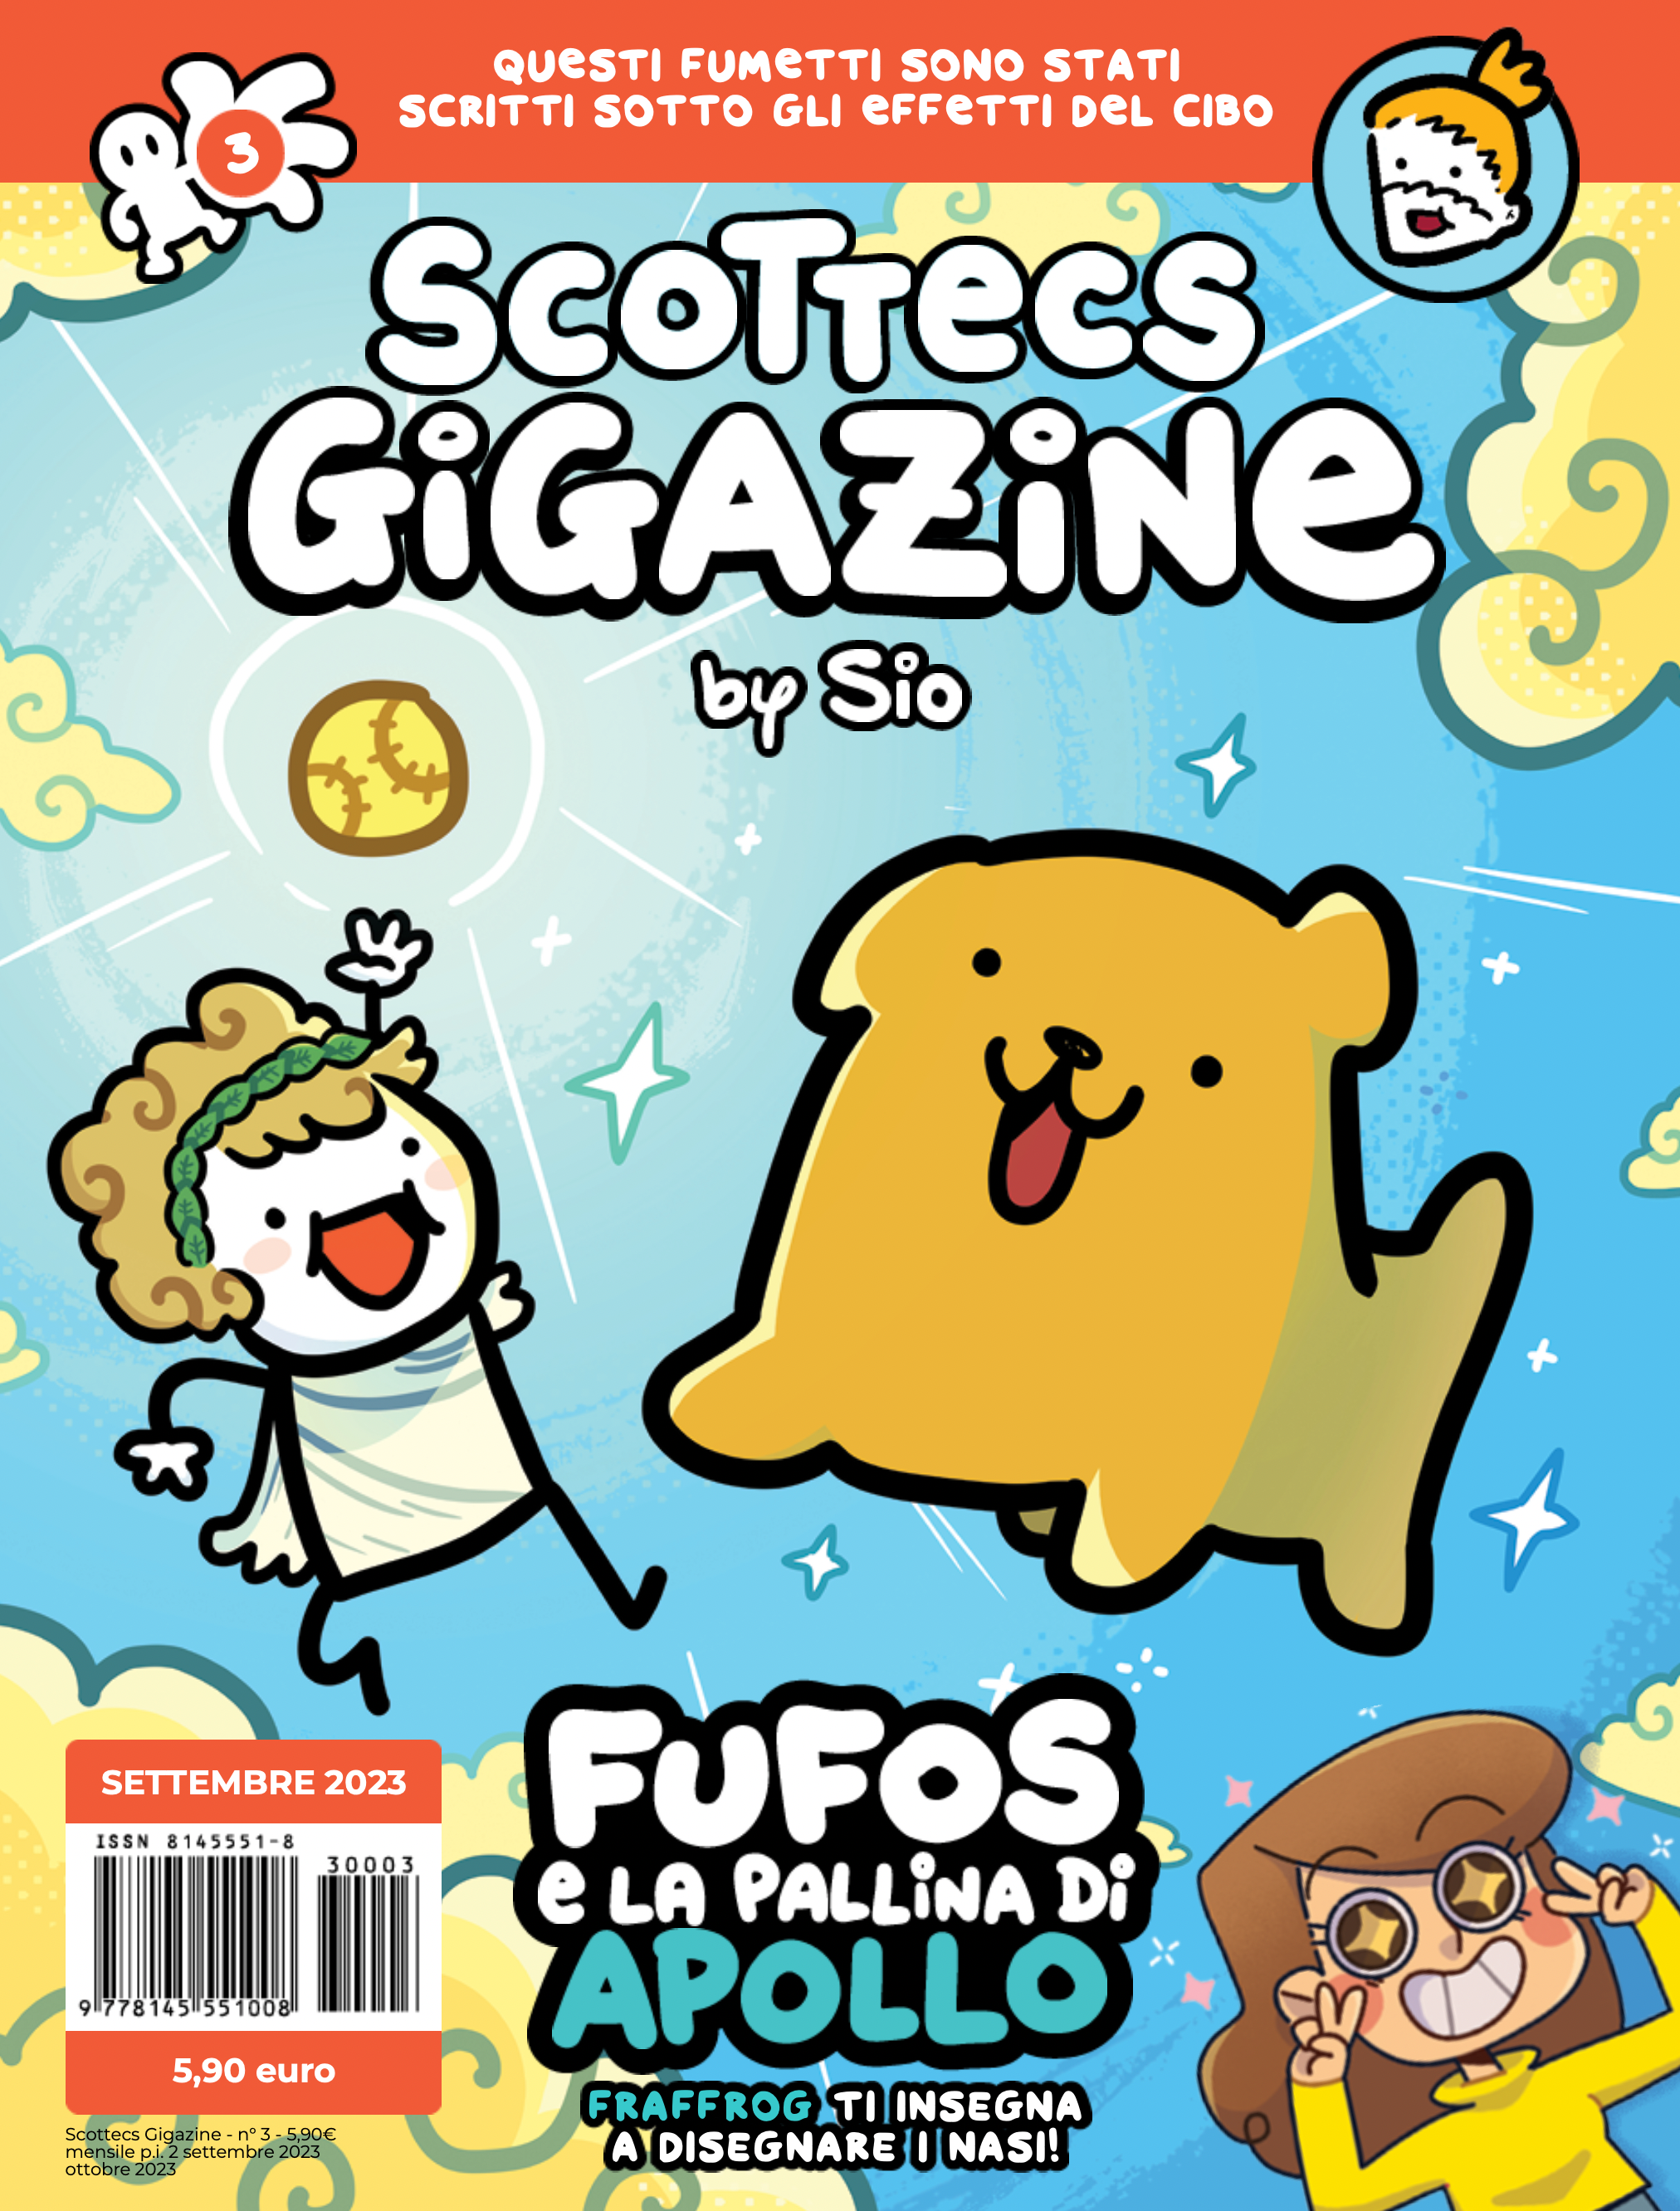 SG 3 Scottecs Gigazine 3 COVER.png